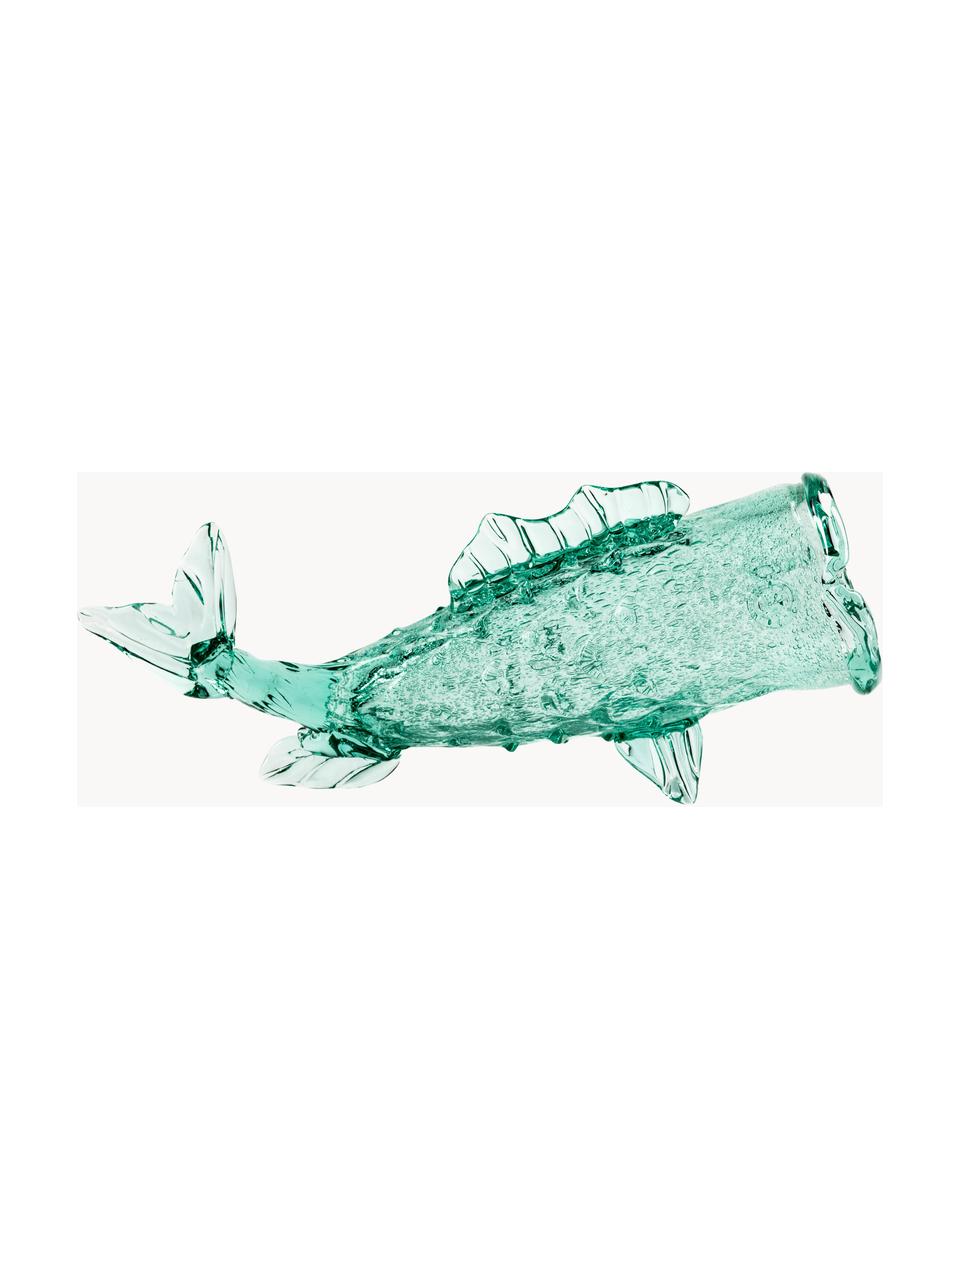 Mundgeblasene Aufbewahrungsdose Fish, Glas, mundgeblasen, Mintgrün, transparent, B 48 x H 20 cm